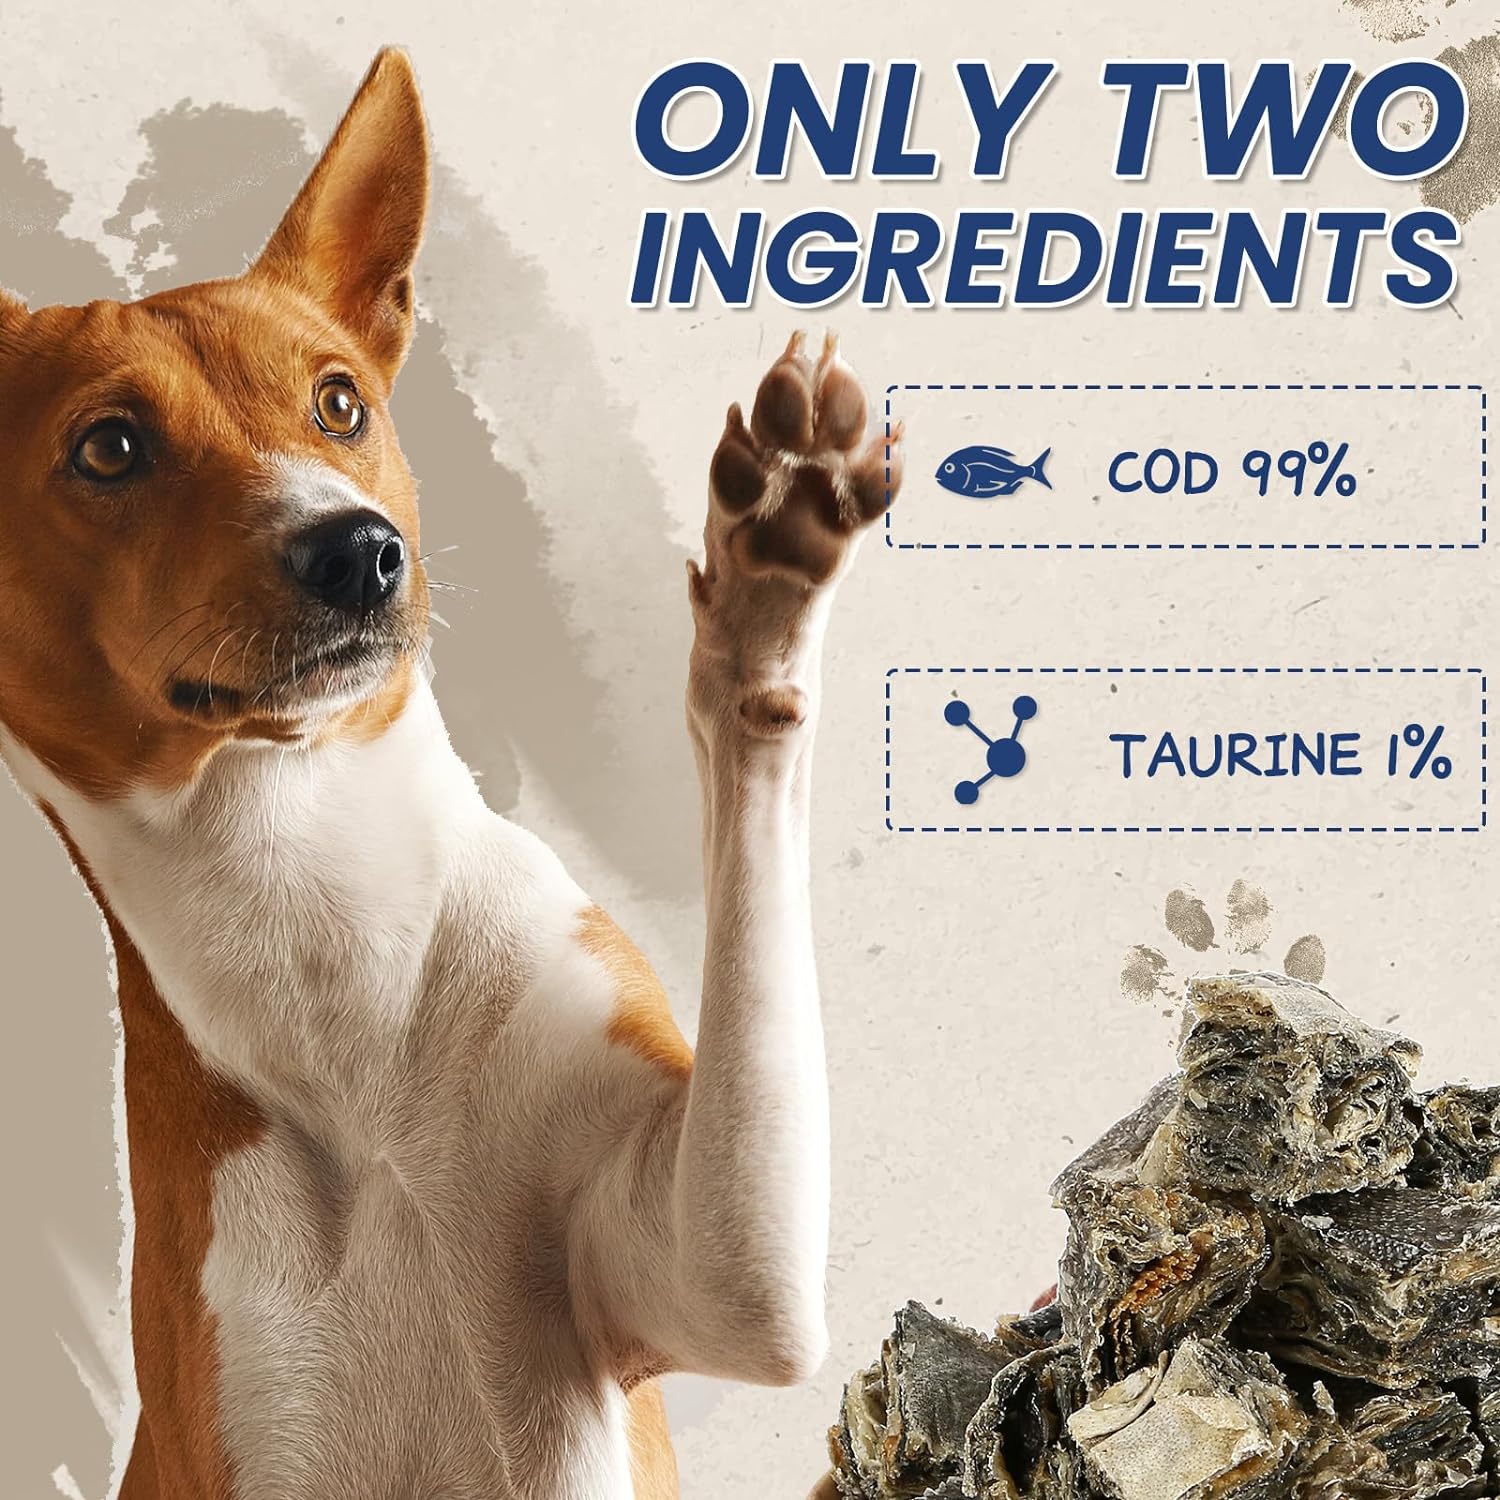 PAWUP Cod Skin Cubes Dog Treats, Chew Fish Skins, 7 oz